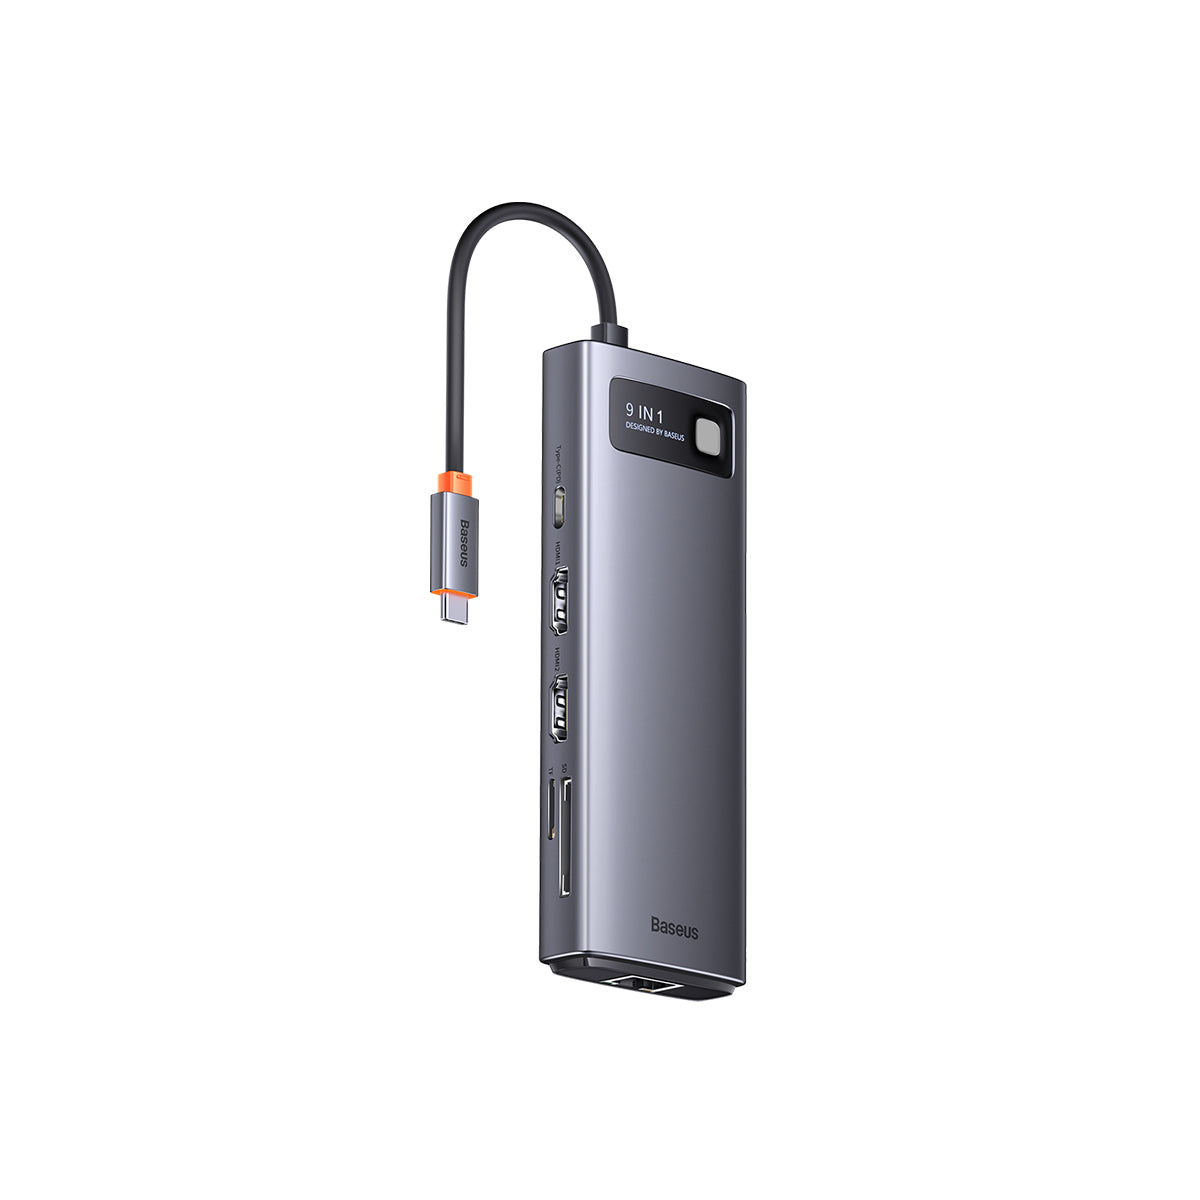 Adaptador Ethernet micro USB de segunda generación Dominican Republic